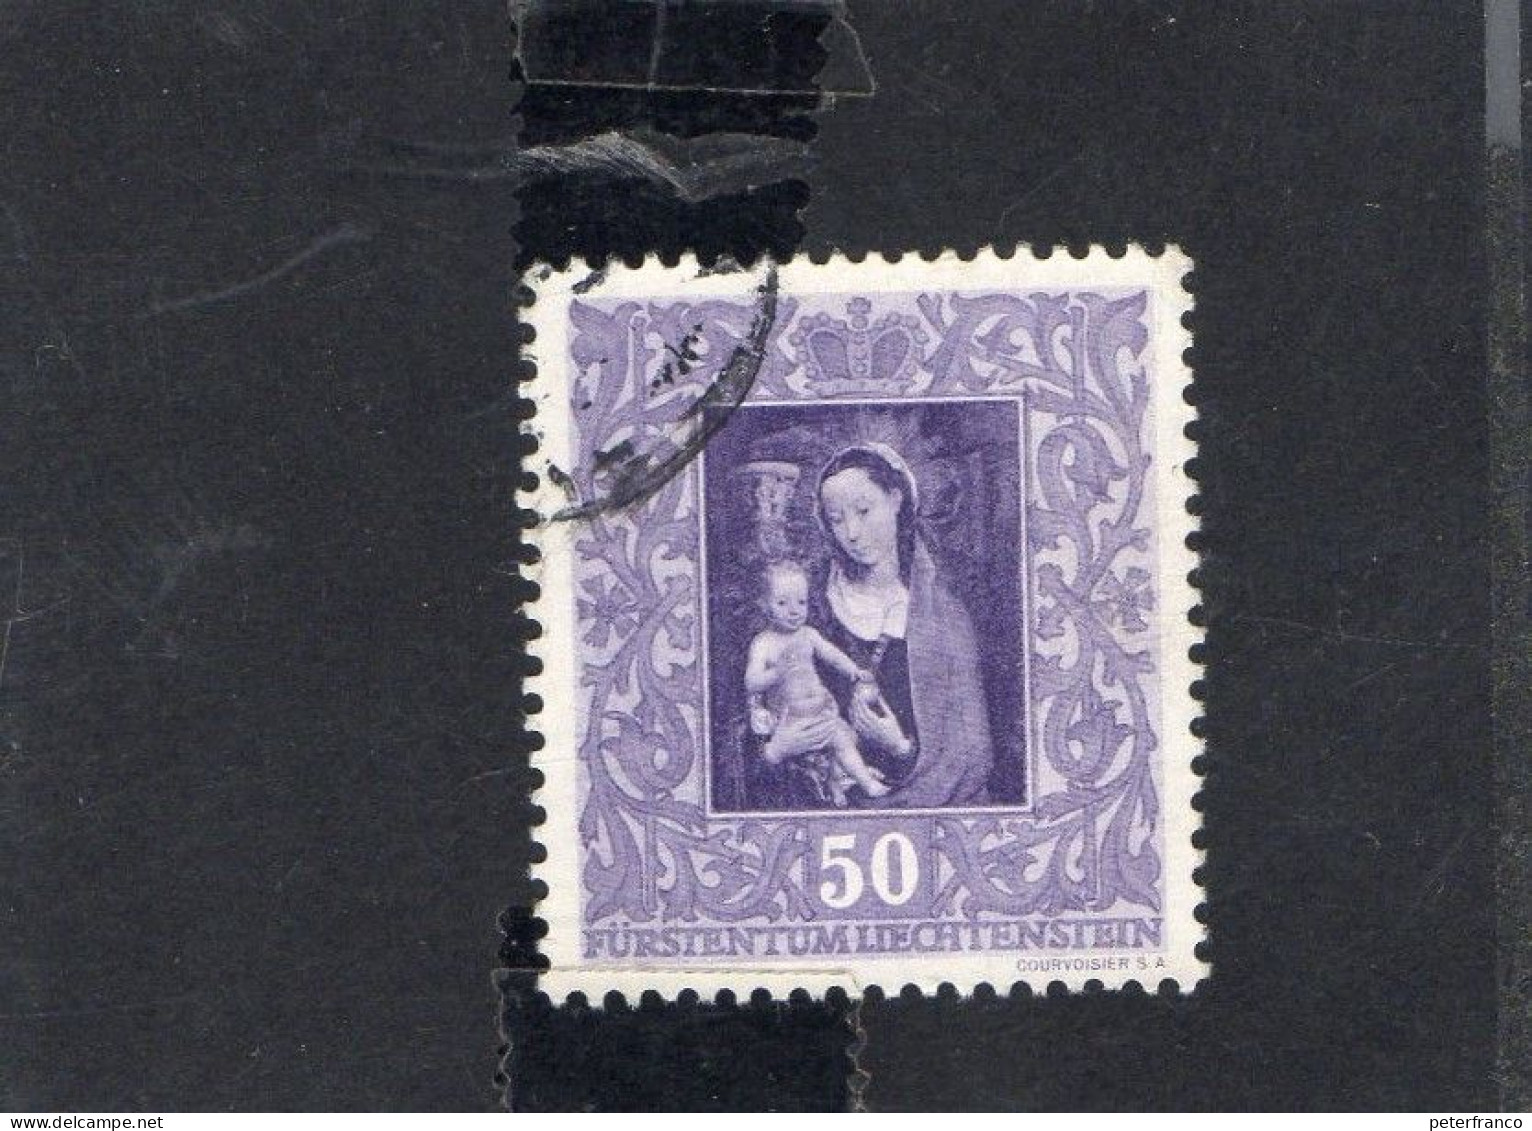 1949 Liechtenstein - Madonna Col Bambino - Dipinto Di Hans Memling - Used Stamps